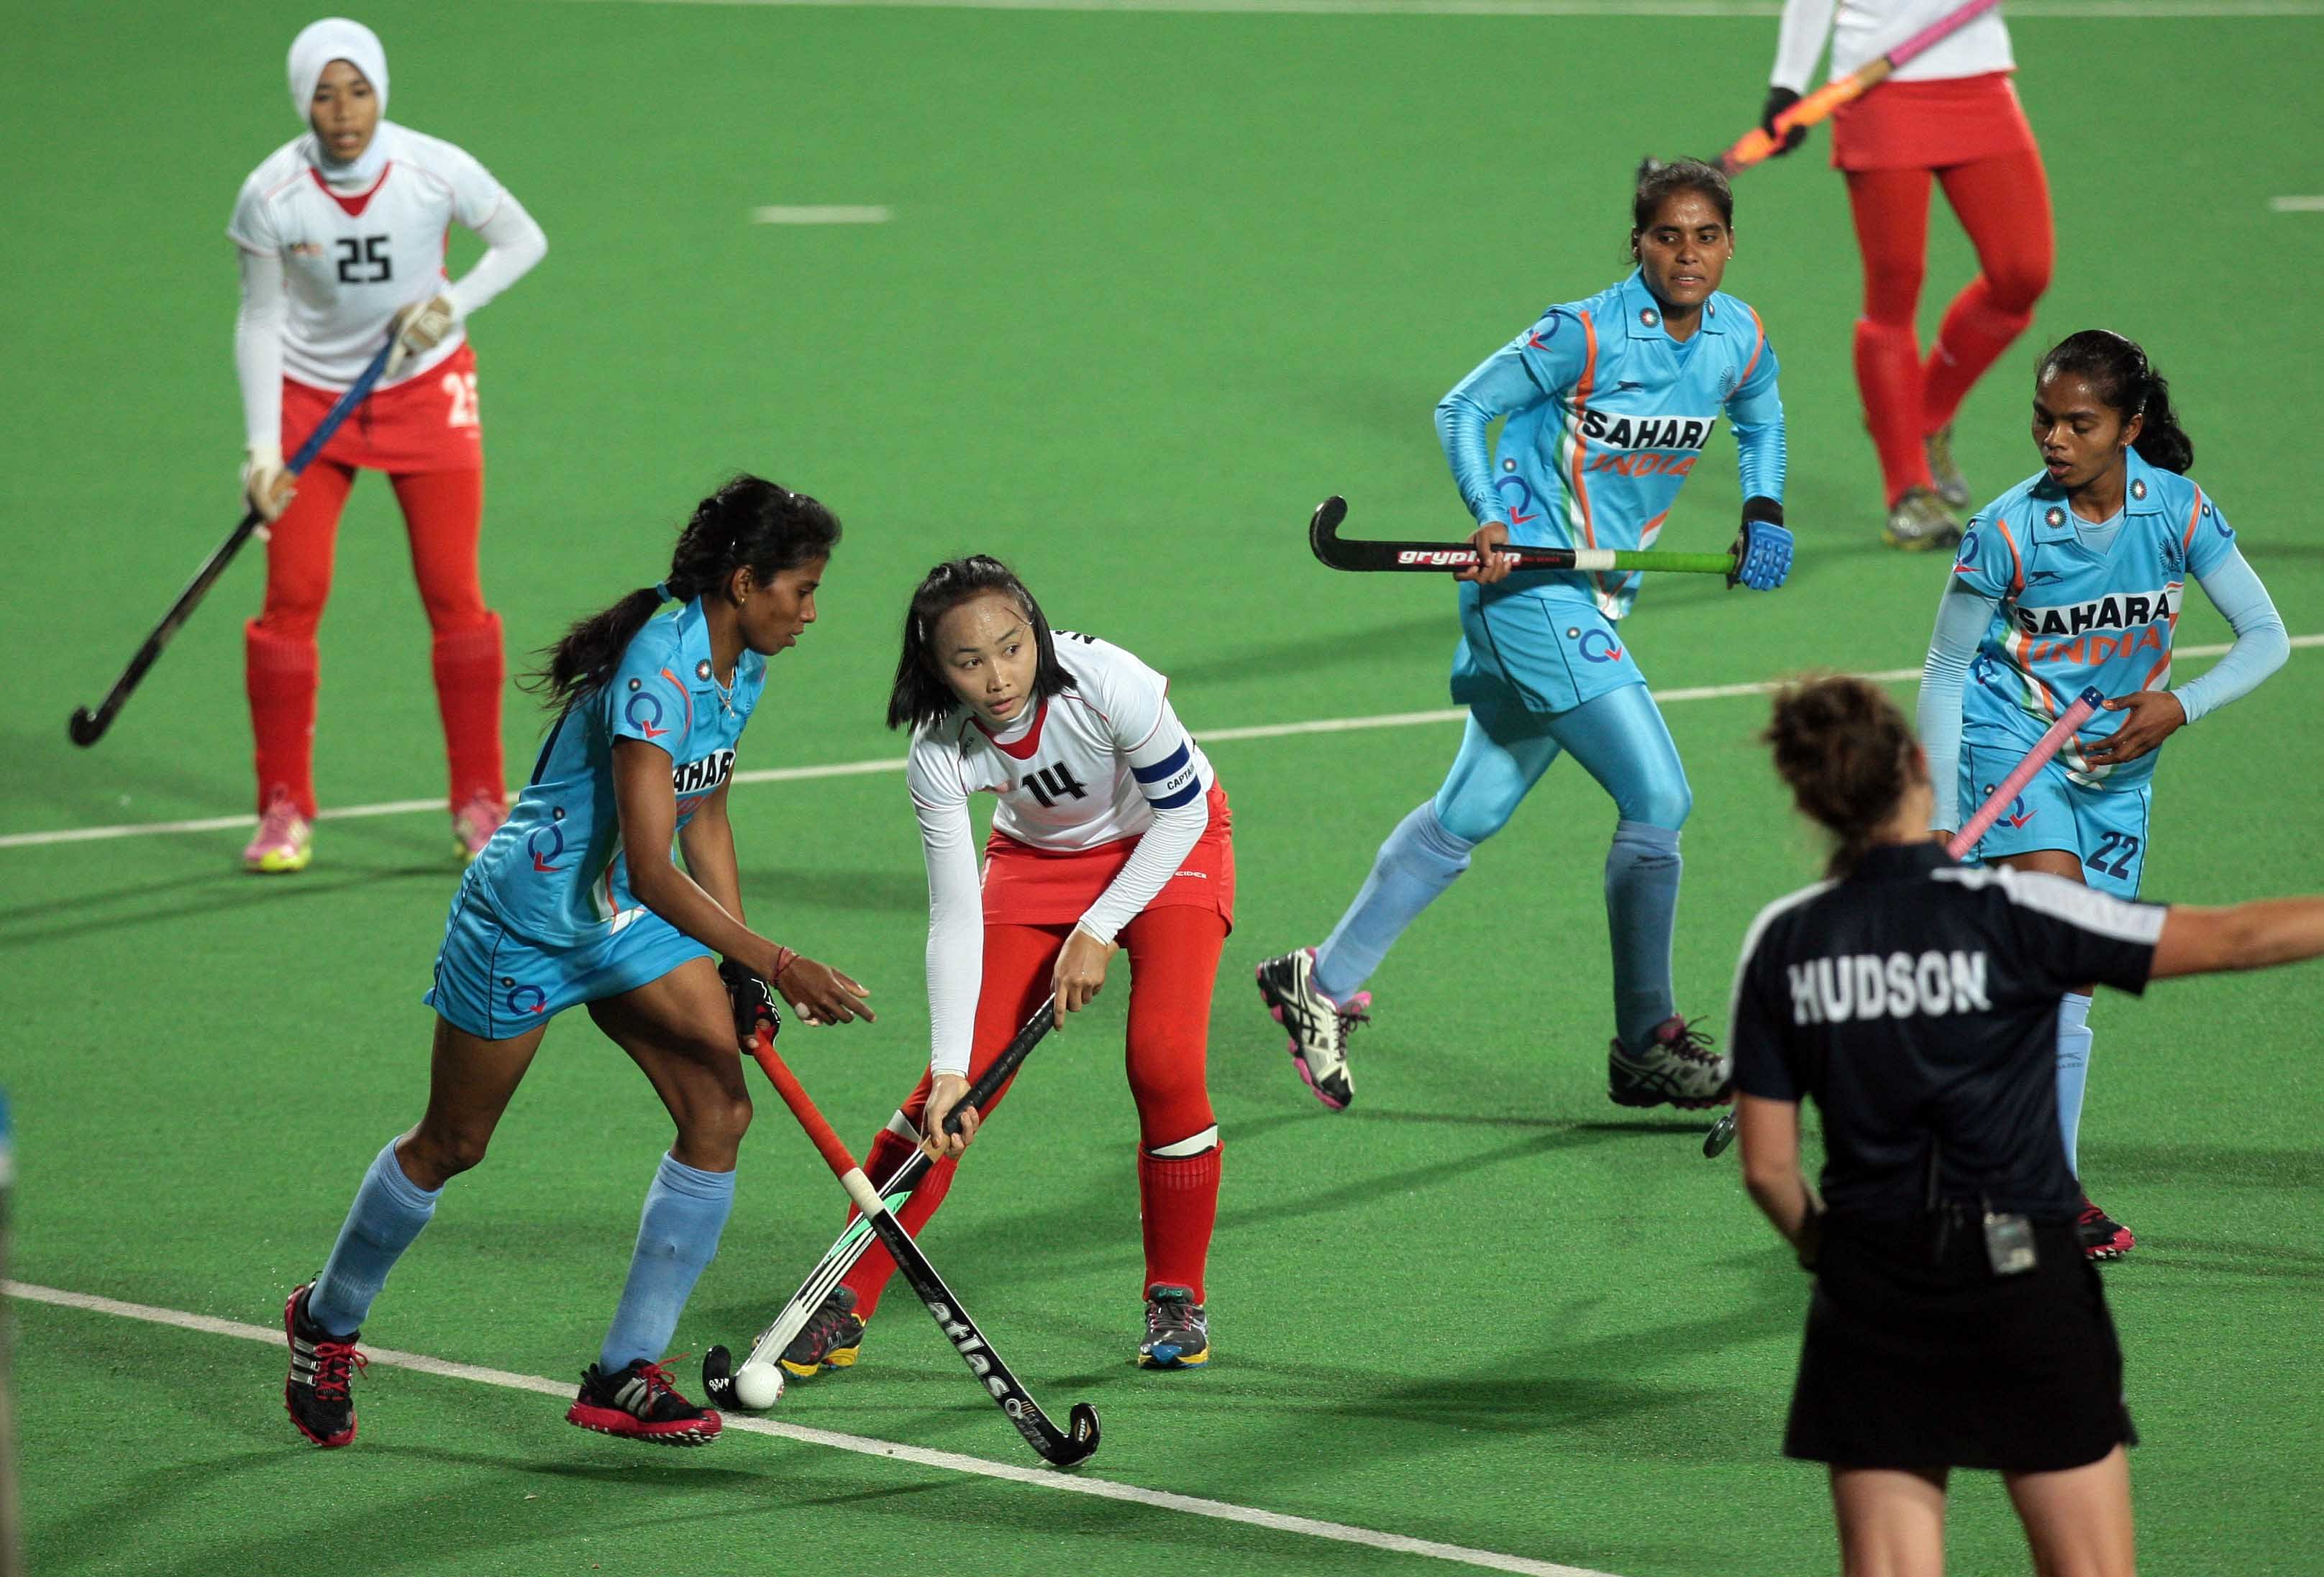 Indian women's hockey team ready for Hockey World League Round 2